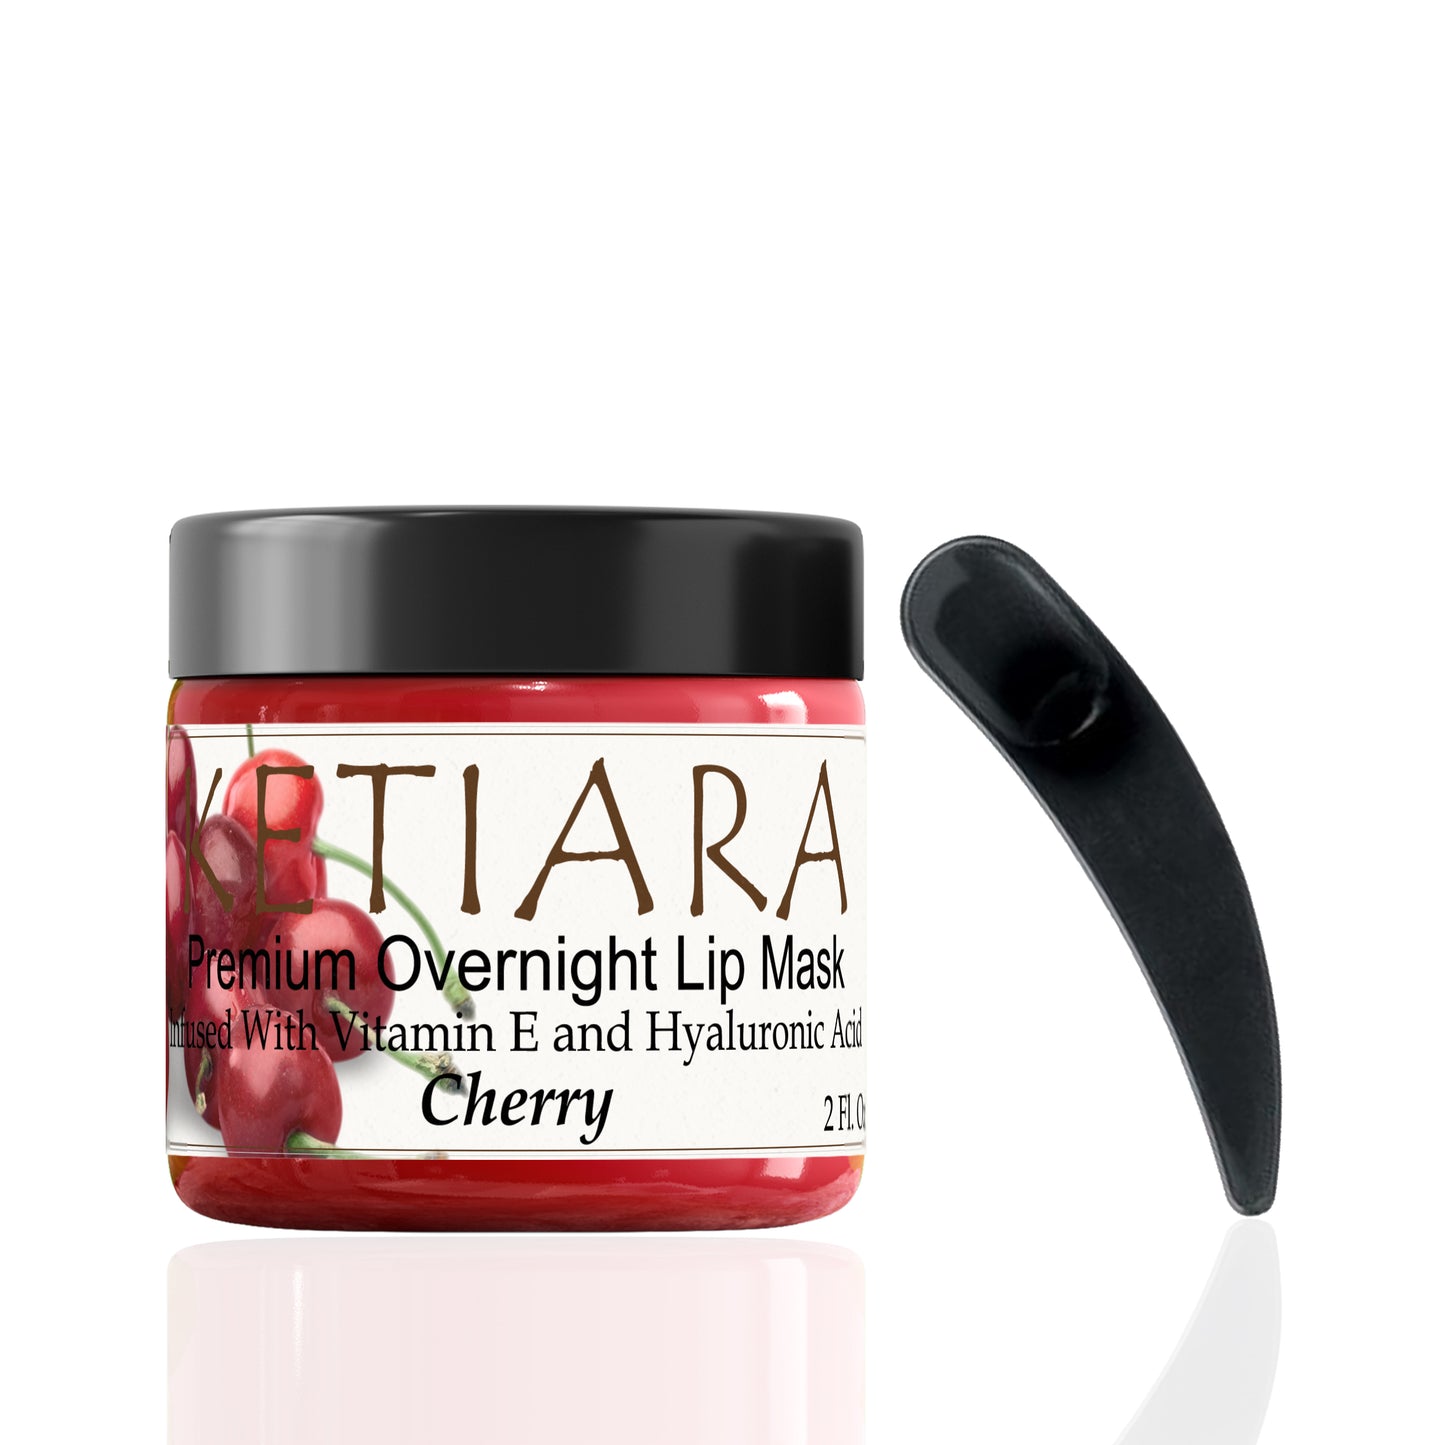 Ketiara Cherry Nourishing and Hydrating Lip Sleeping Mask with Vitamin C, Hyaluronic Acid and More